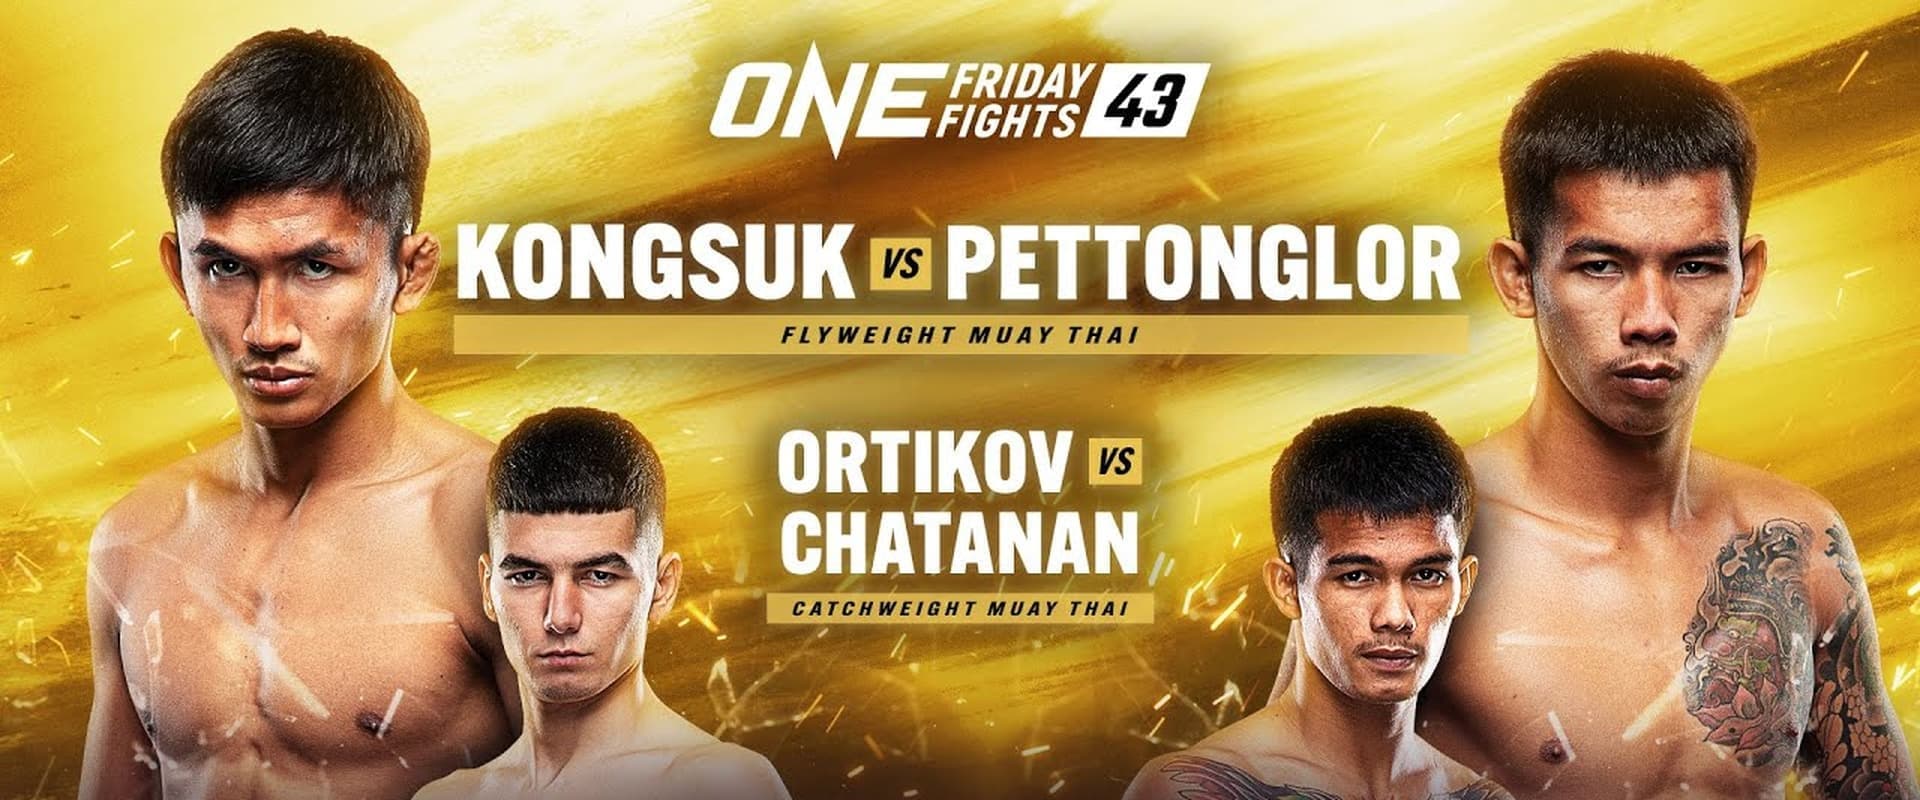 ONE Friday Fights 43: Kongsuk vs. Pettonglor